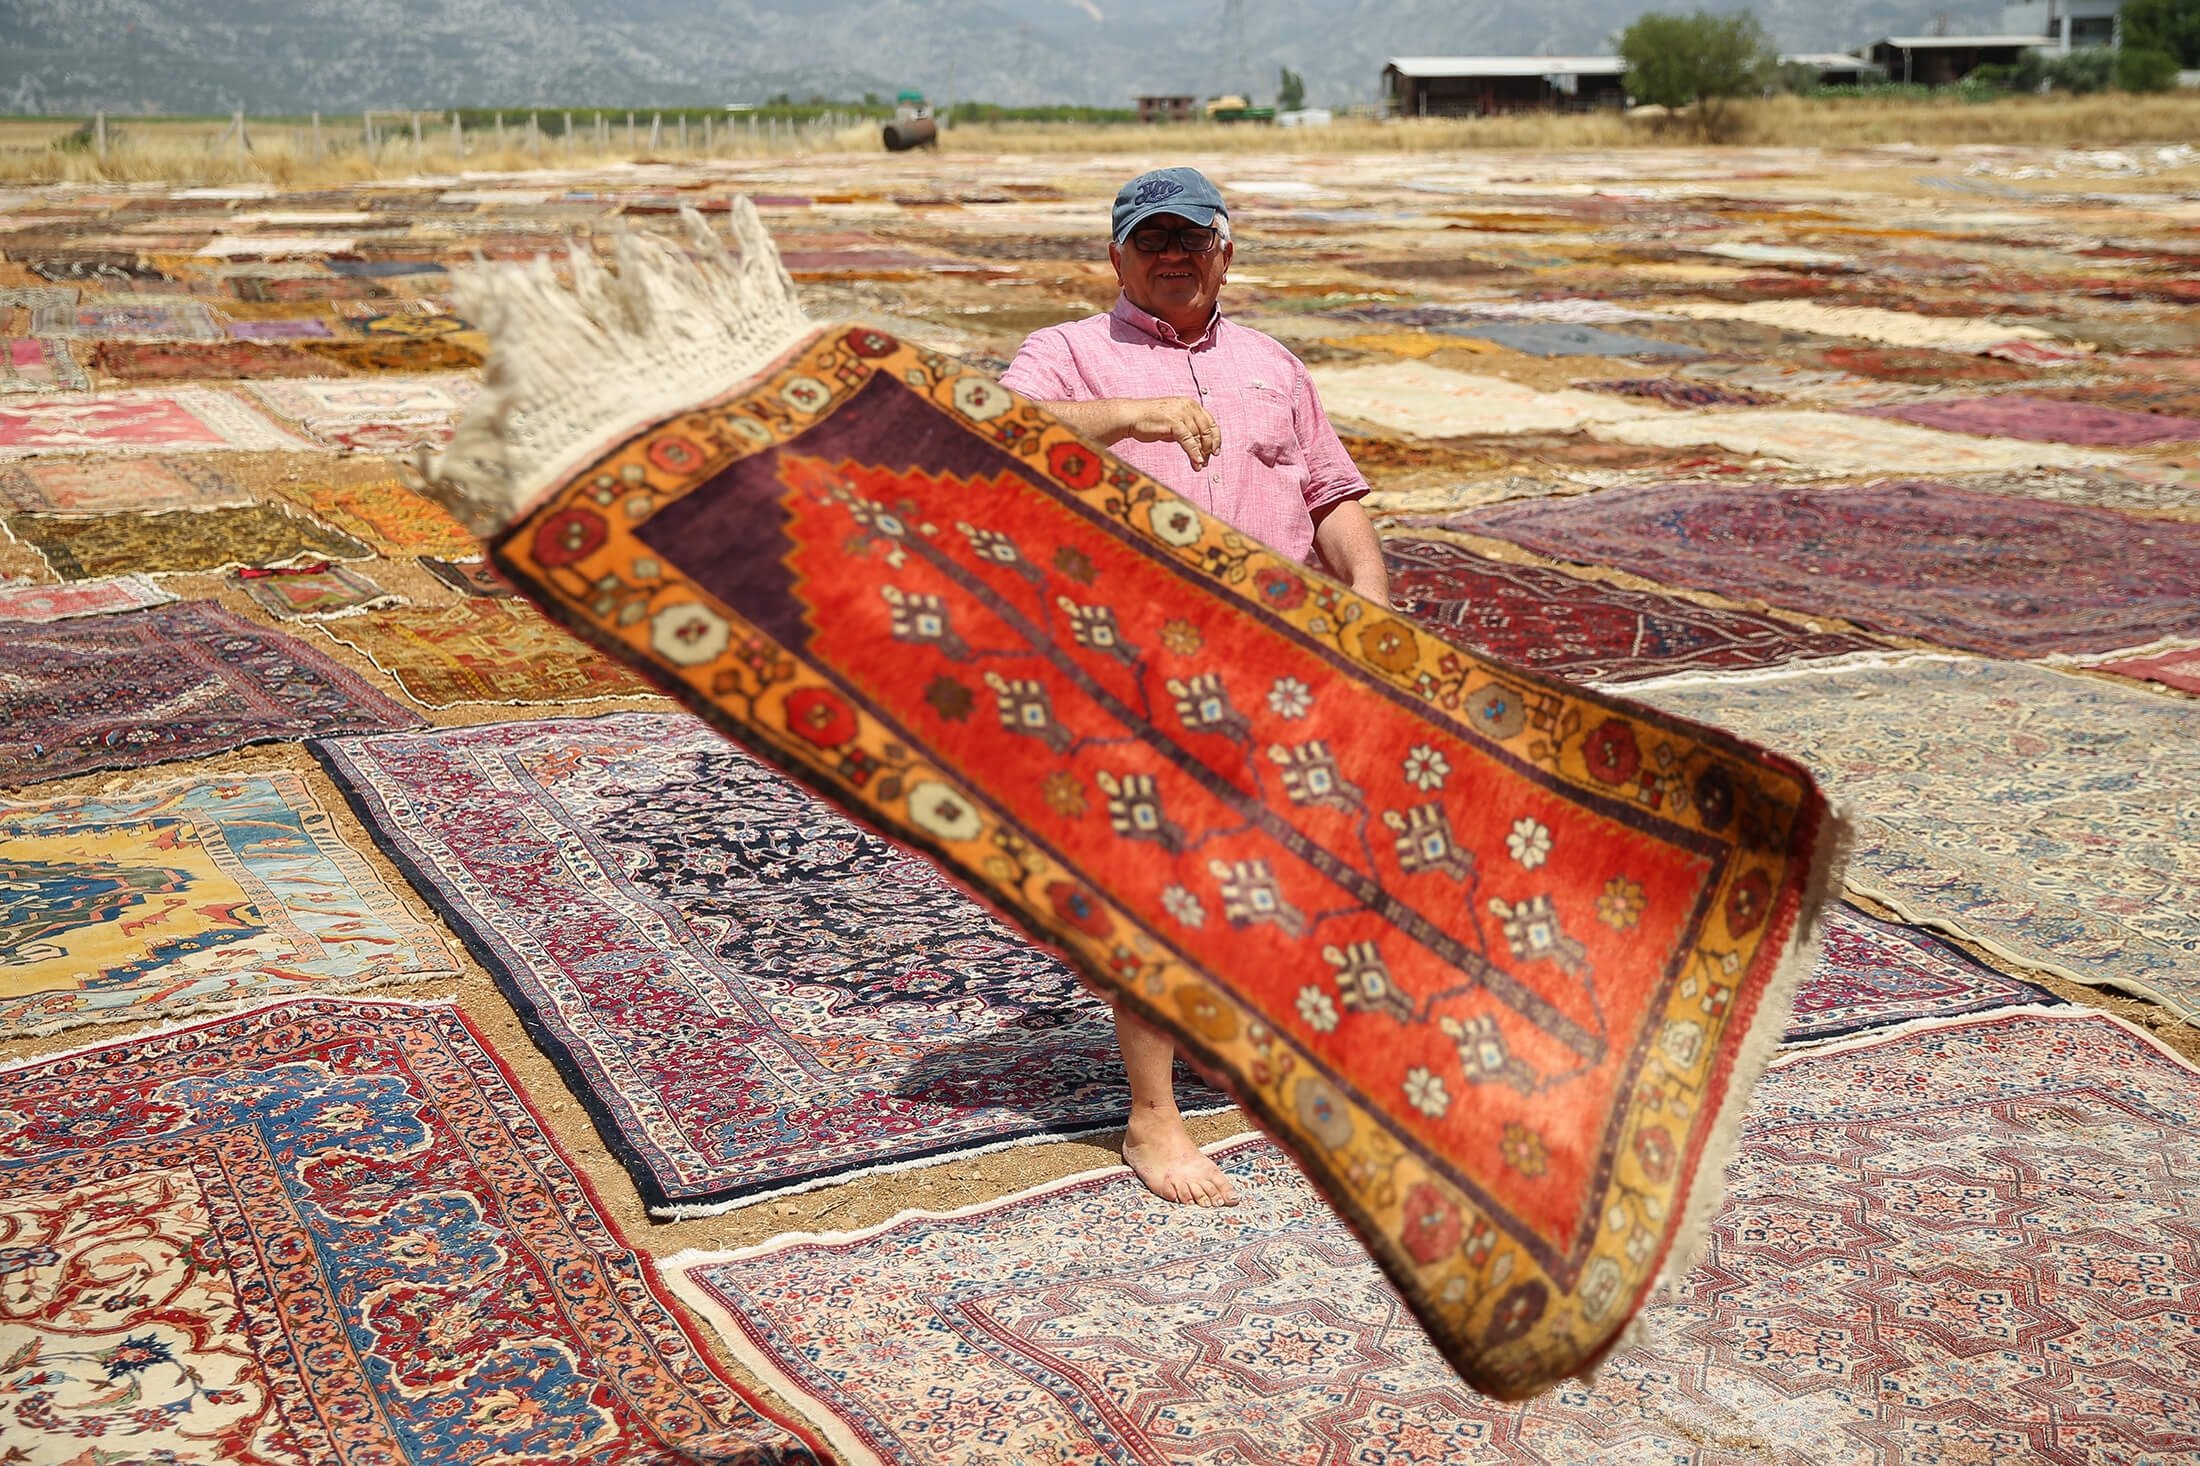 Hand-woven carpet and kilim fields of Turkey's Antalya | Daily Sabah